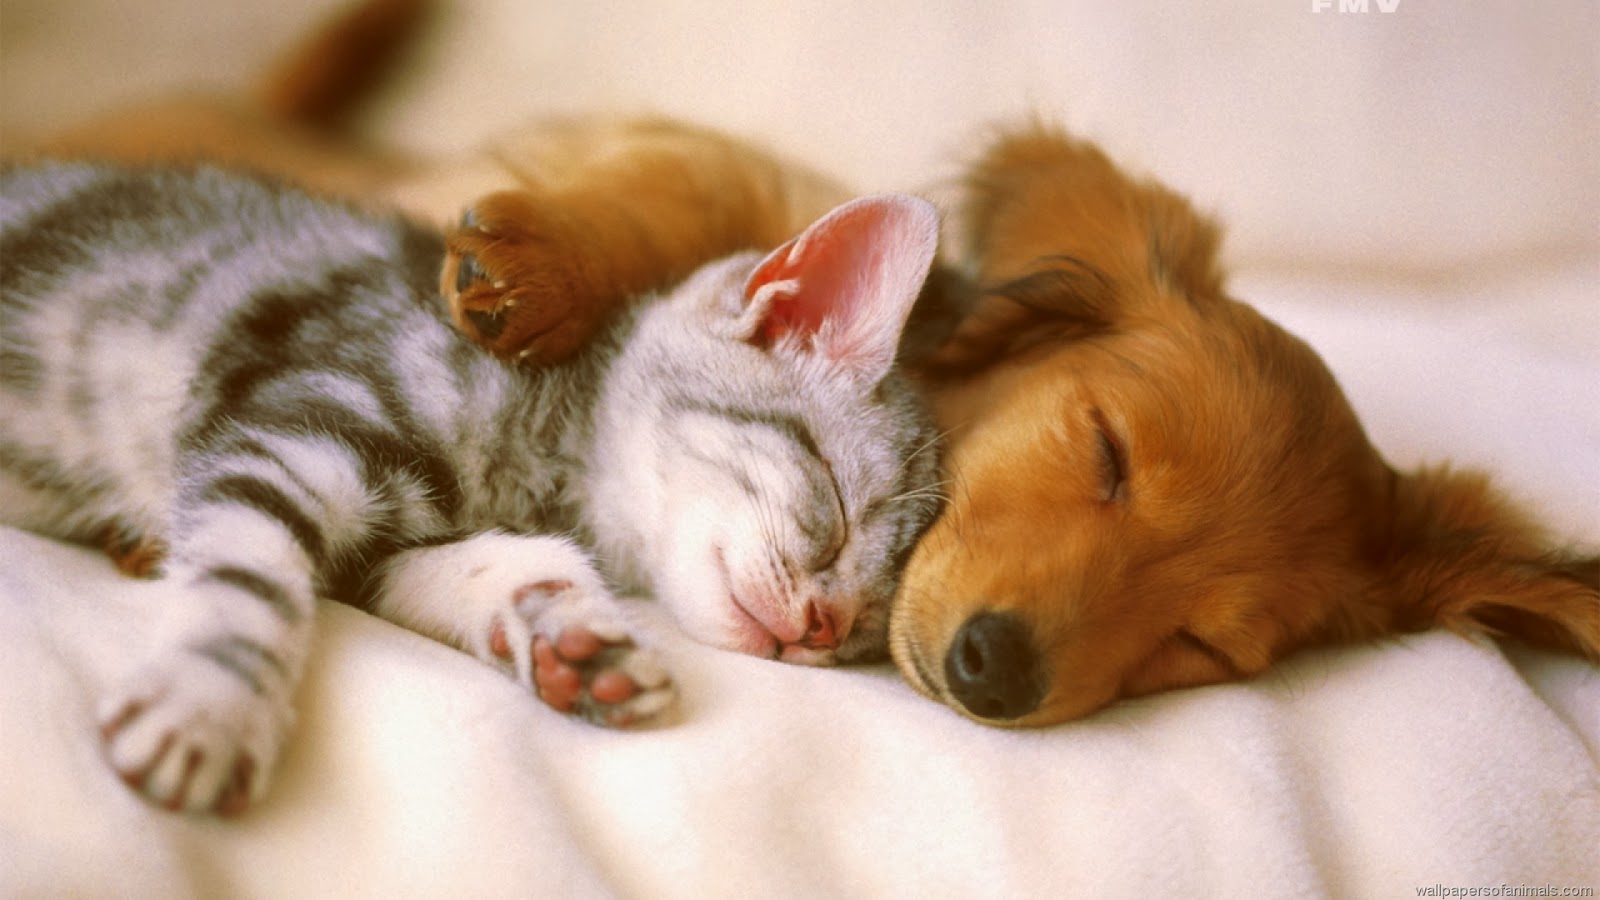 Free download set cute dog and cat wallpaper for desktop [1600x900] for your Desktop, Mobile